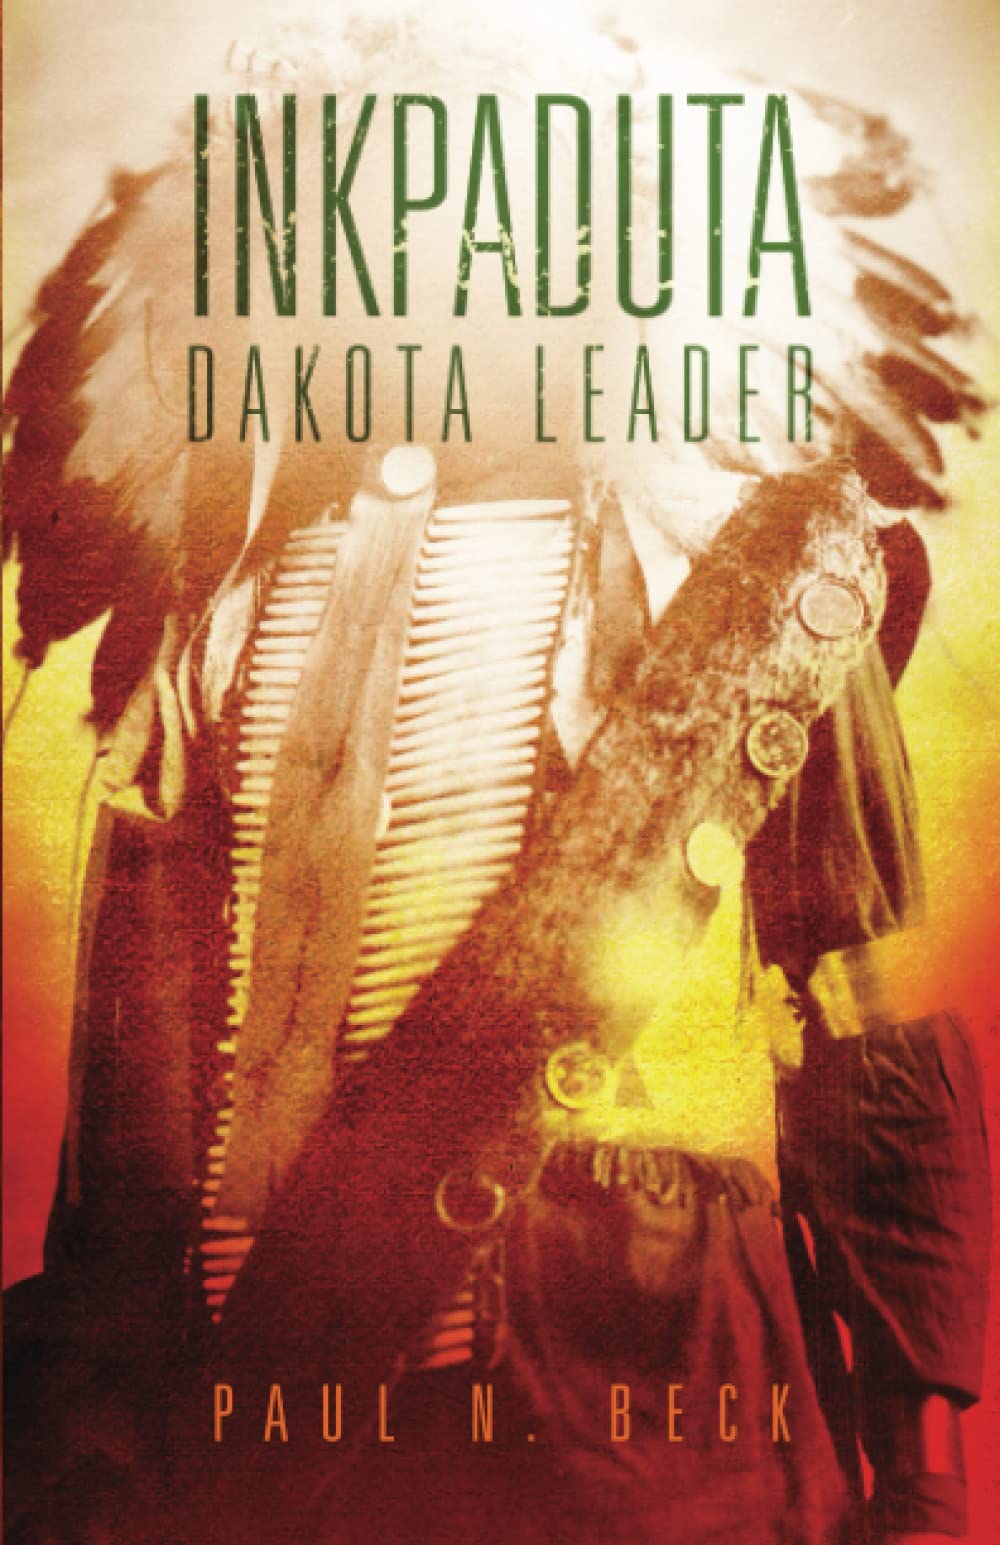 Inkpaduta: Dakota Leader by Paul. N. Beck